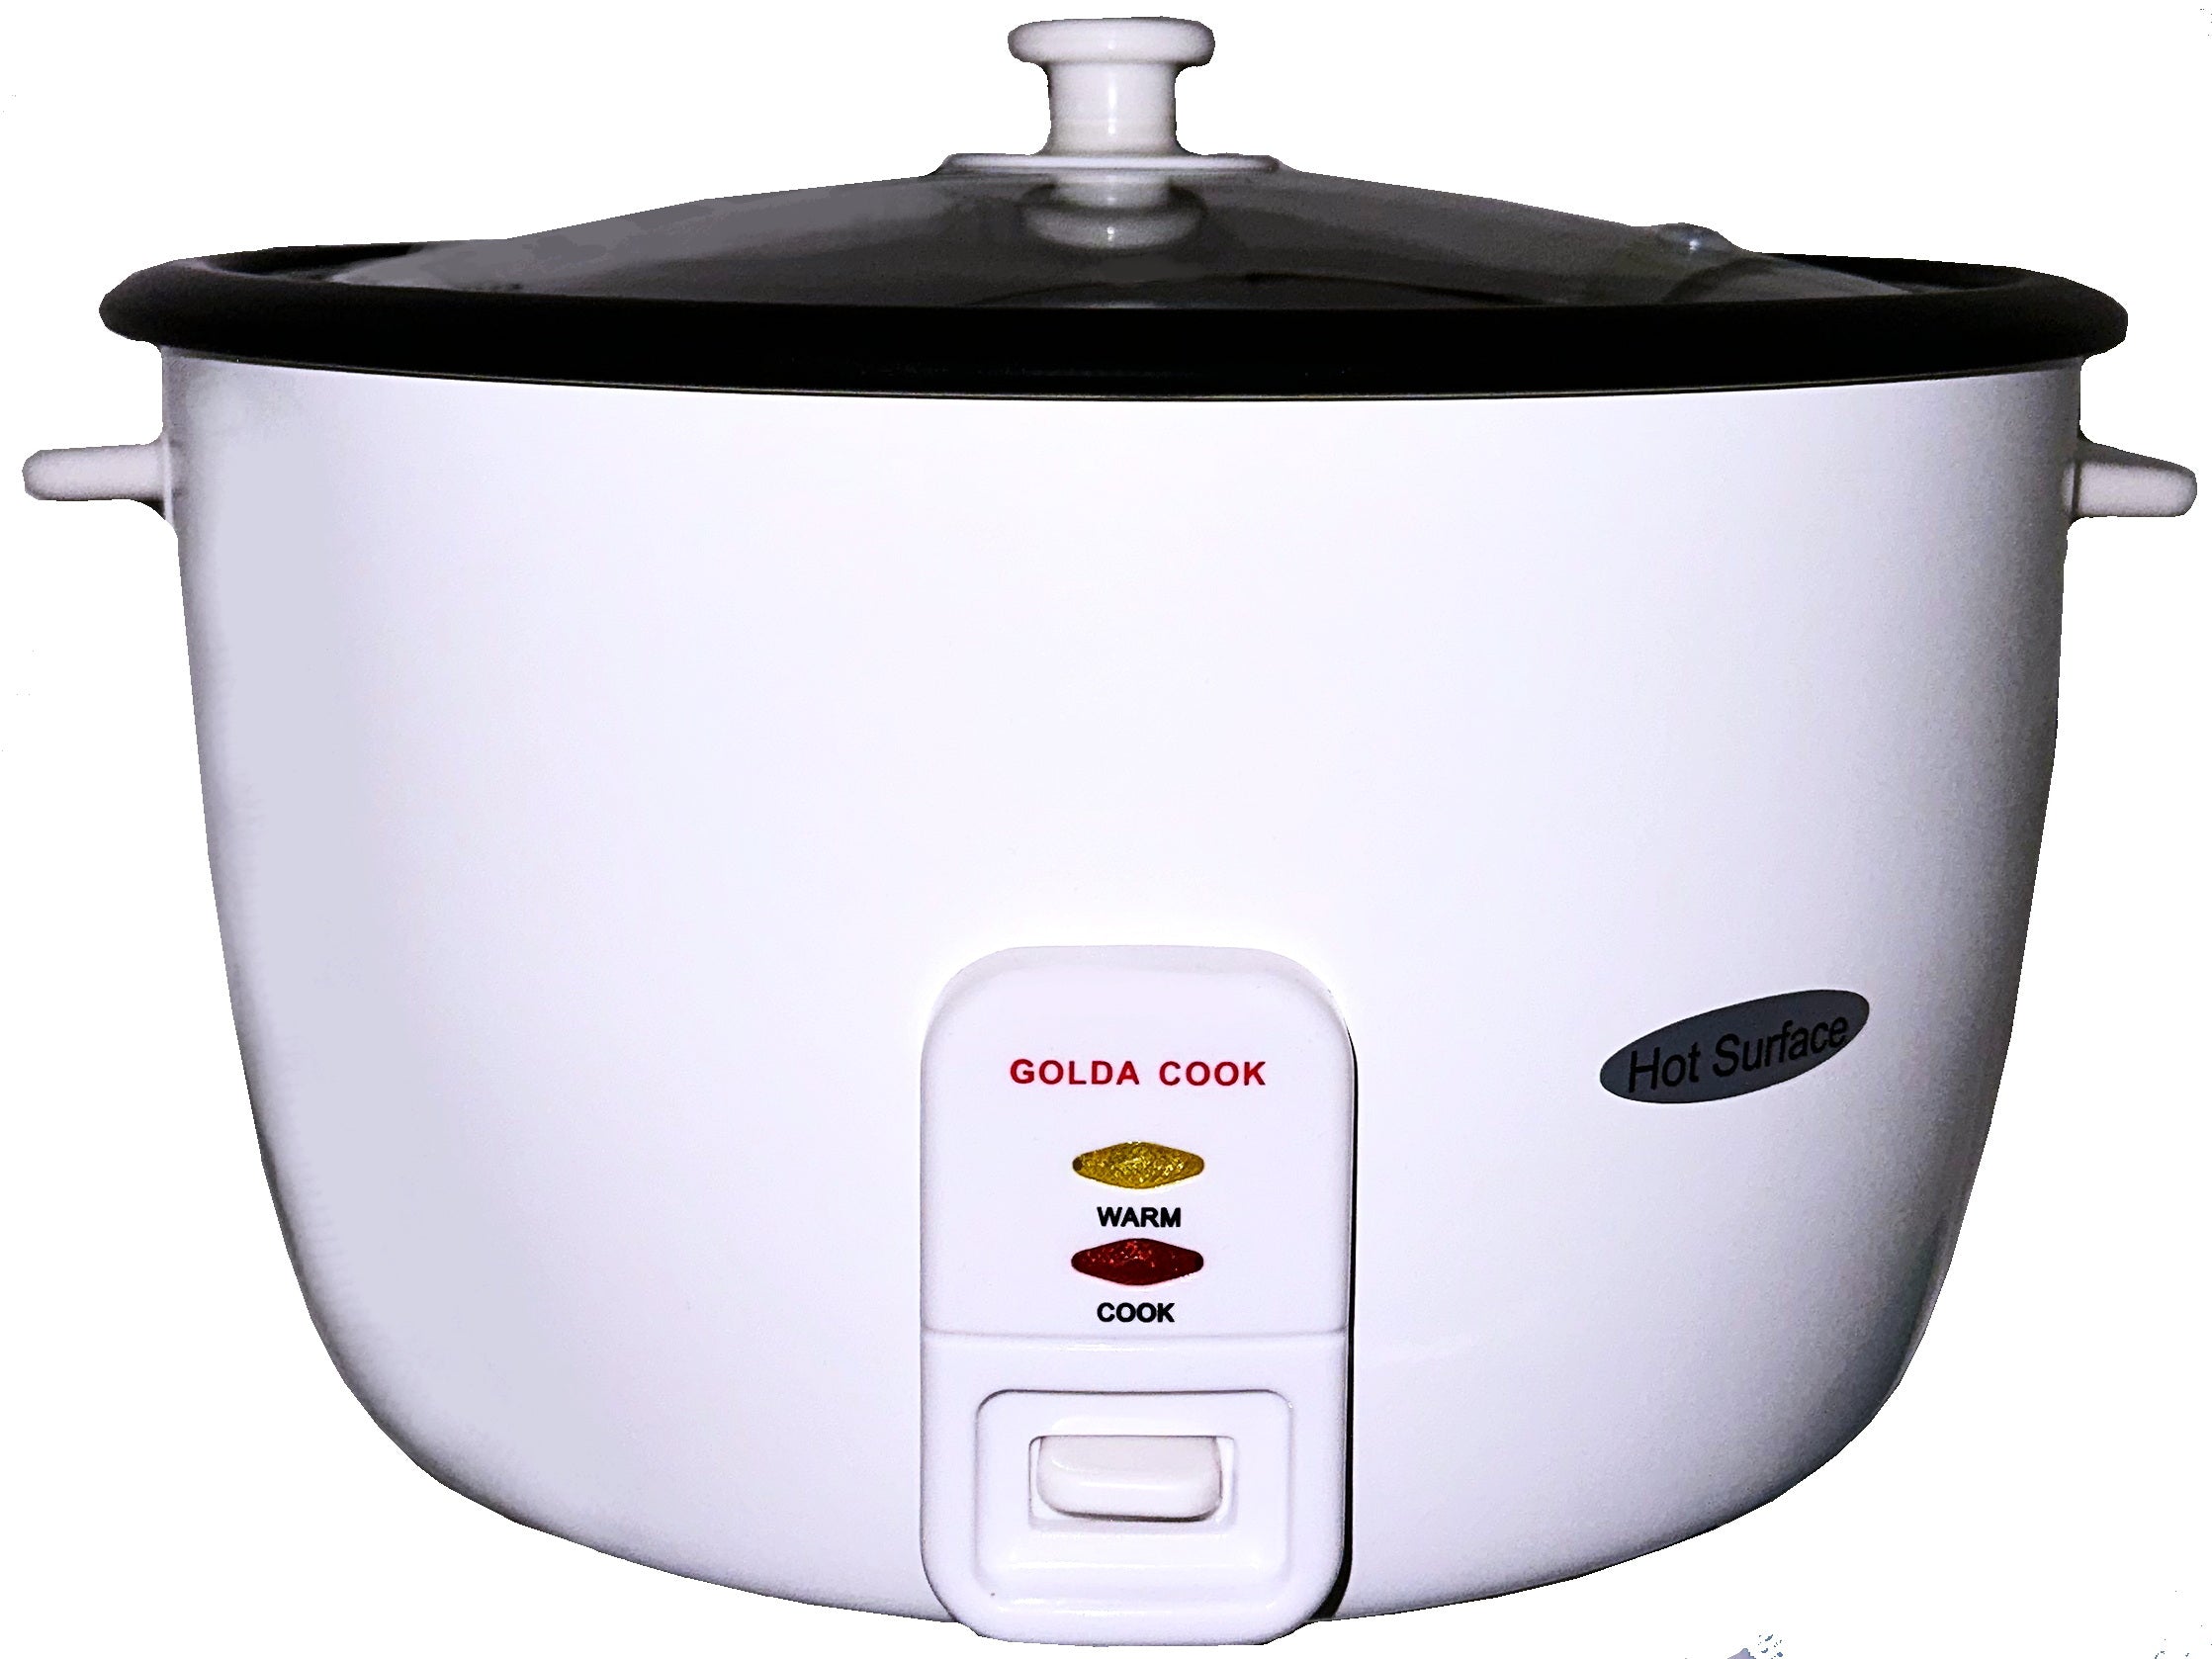 Rice Cooker Automatic - Rice Crust (Tahdig)Maker - 3 CUP (PoloPaz, DRC –  Kalamala